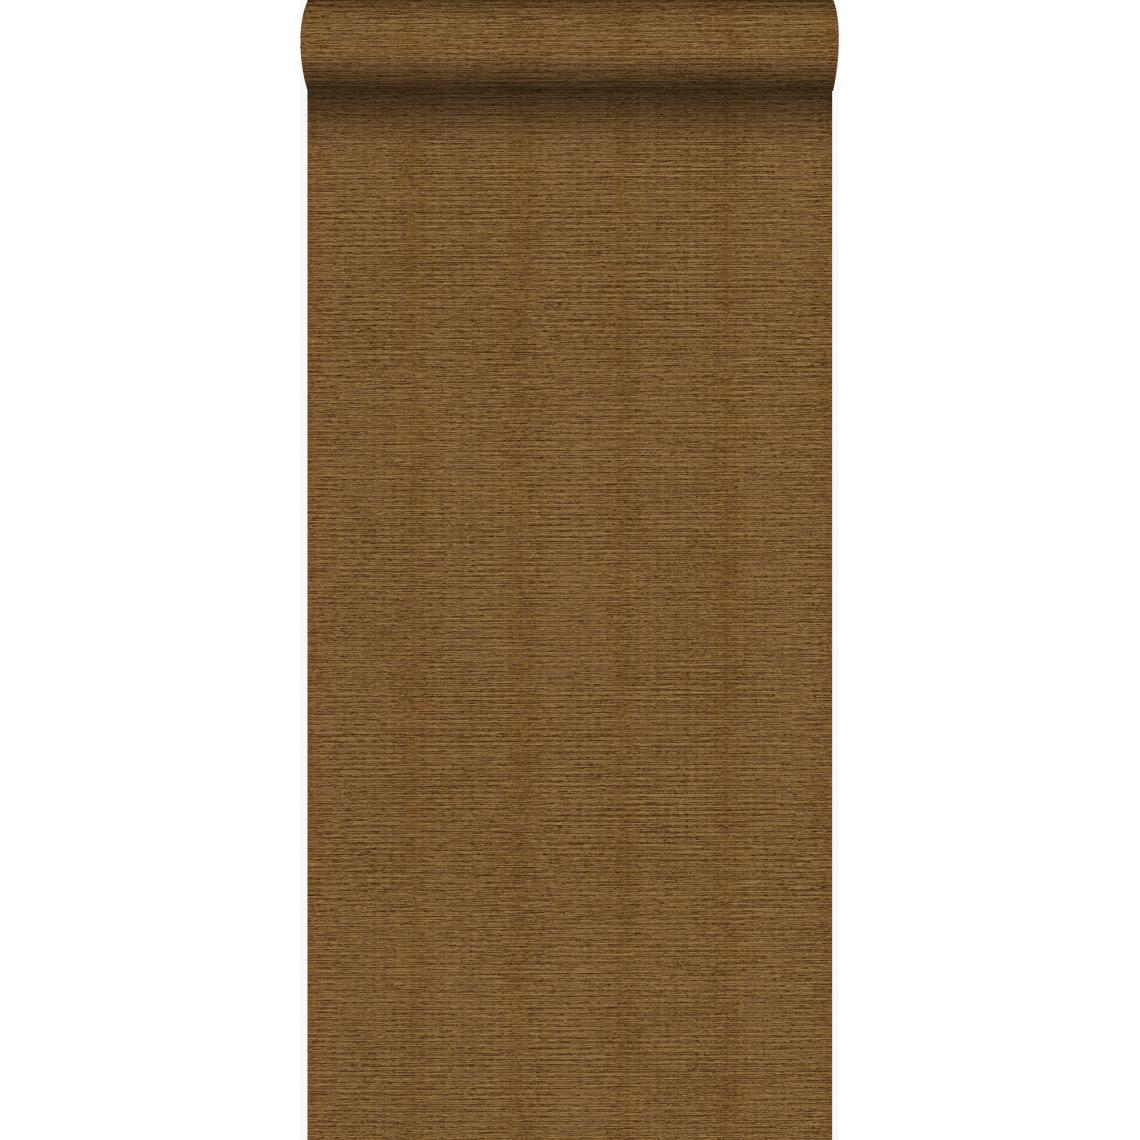 Origin - Origin papier peint lin brun rouille - 347379 - 53 cm x 10,05 m - Papier peint